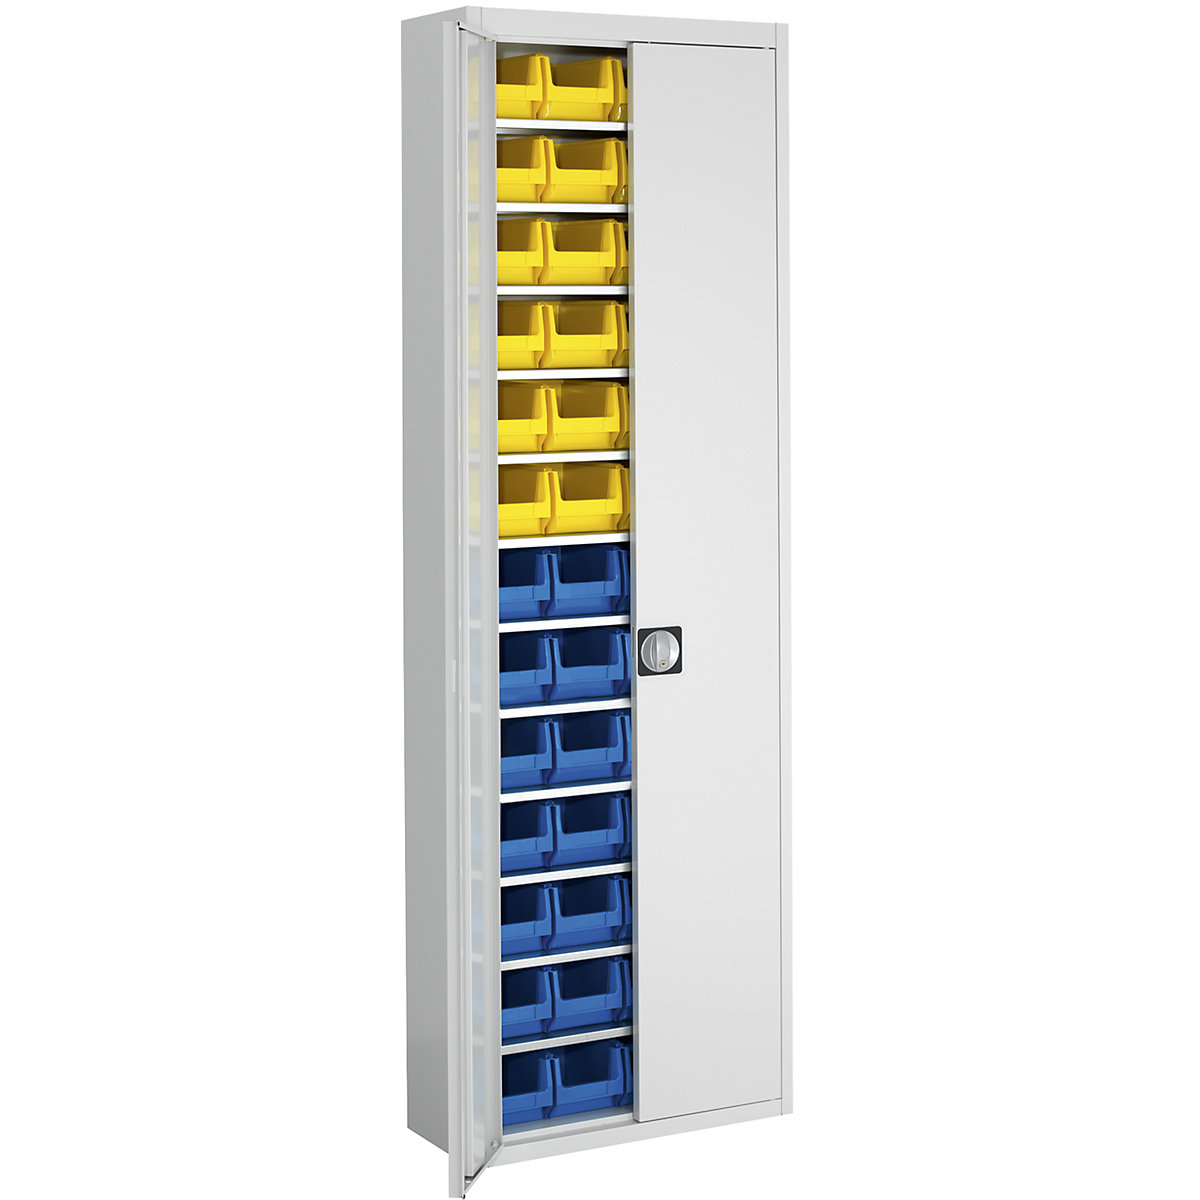 Storage cupboard with open fronted storage bins – mauser, HxWxD 2150 x 680 x 280 mm, single colour, grey, 52 bins-2